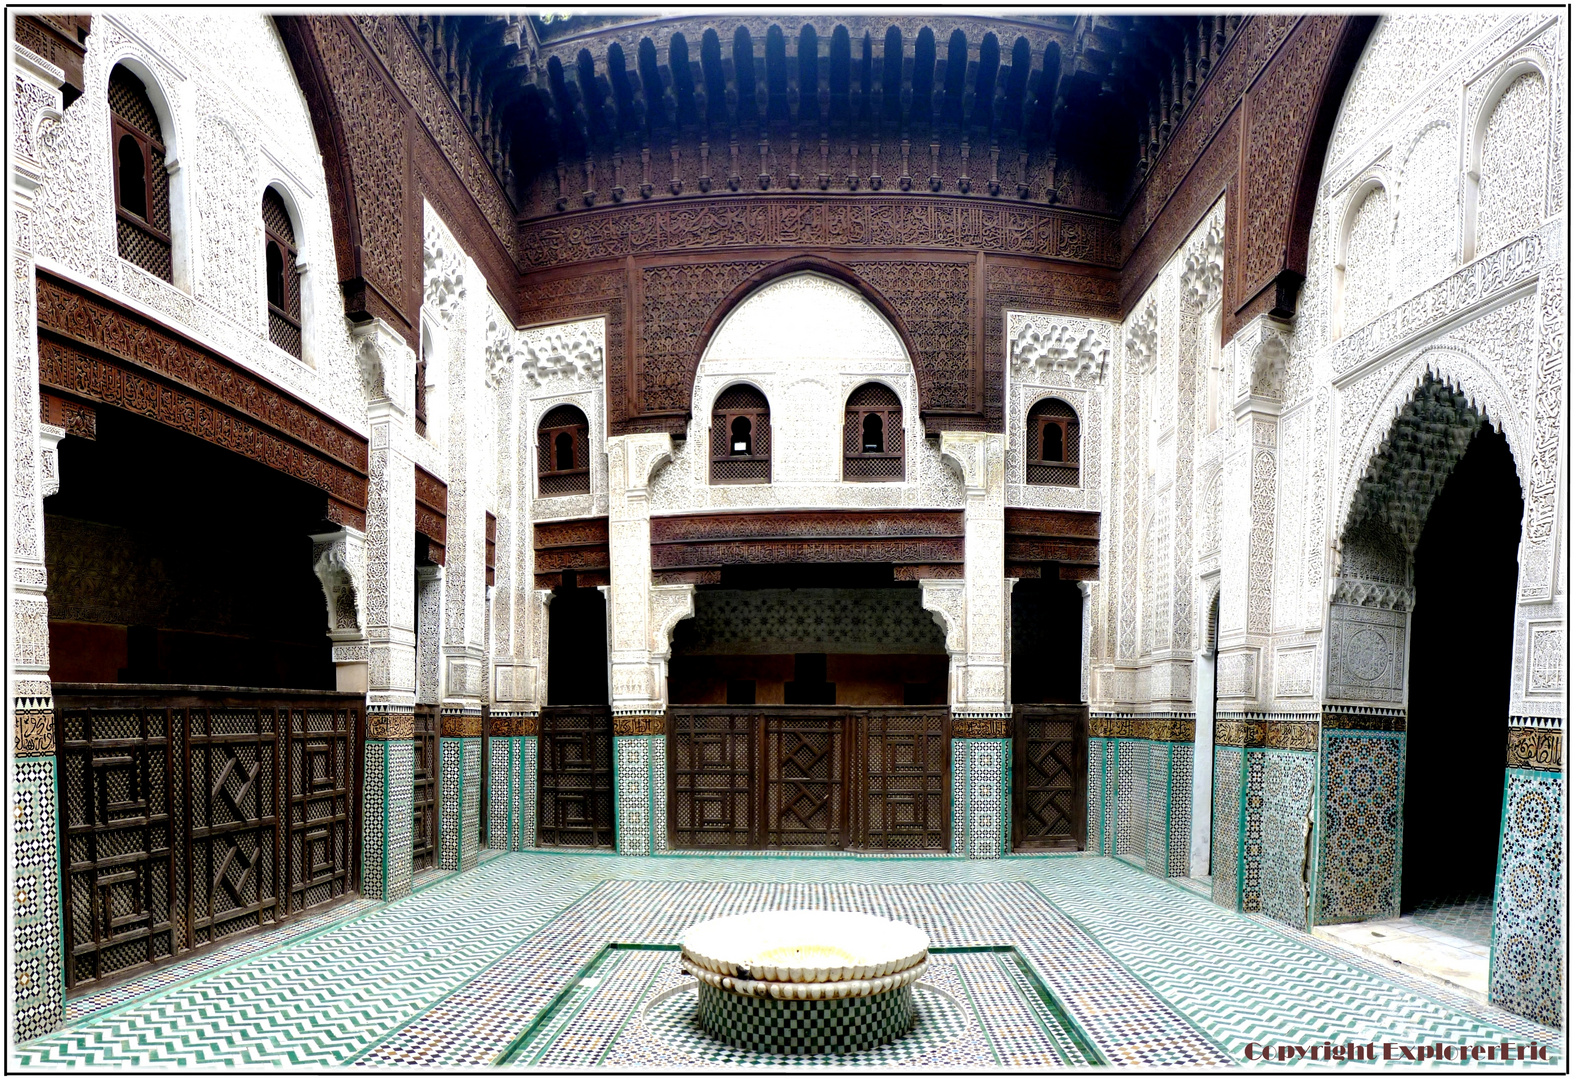 Panorama eines Palasts in Meknes